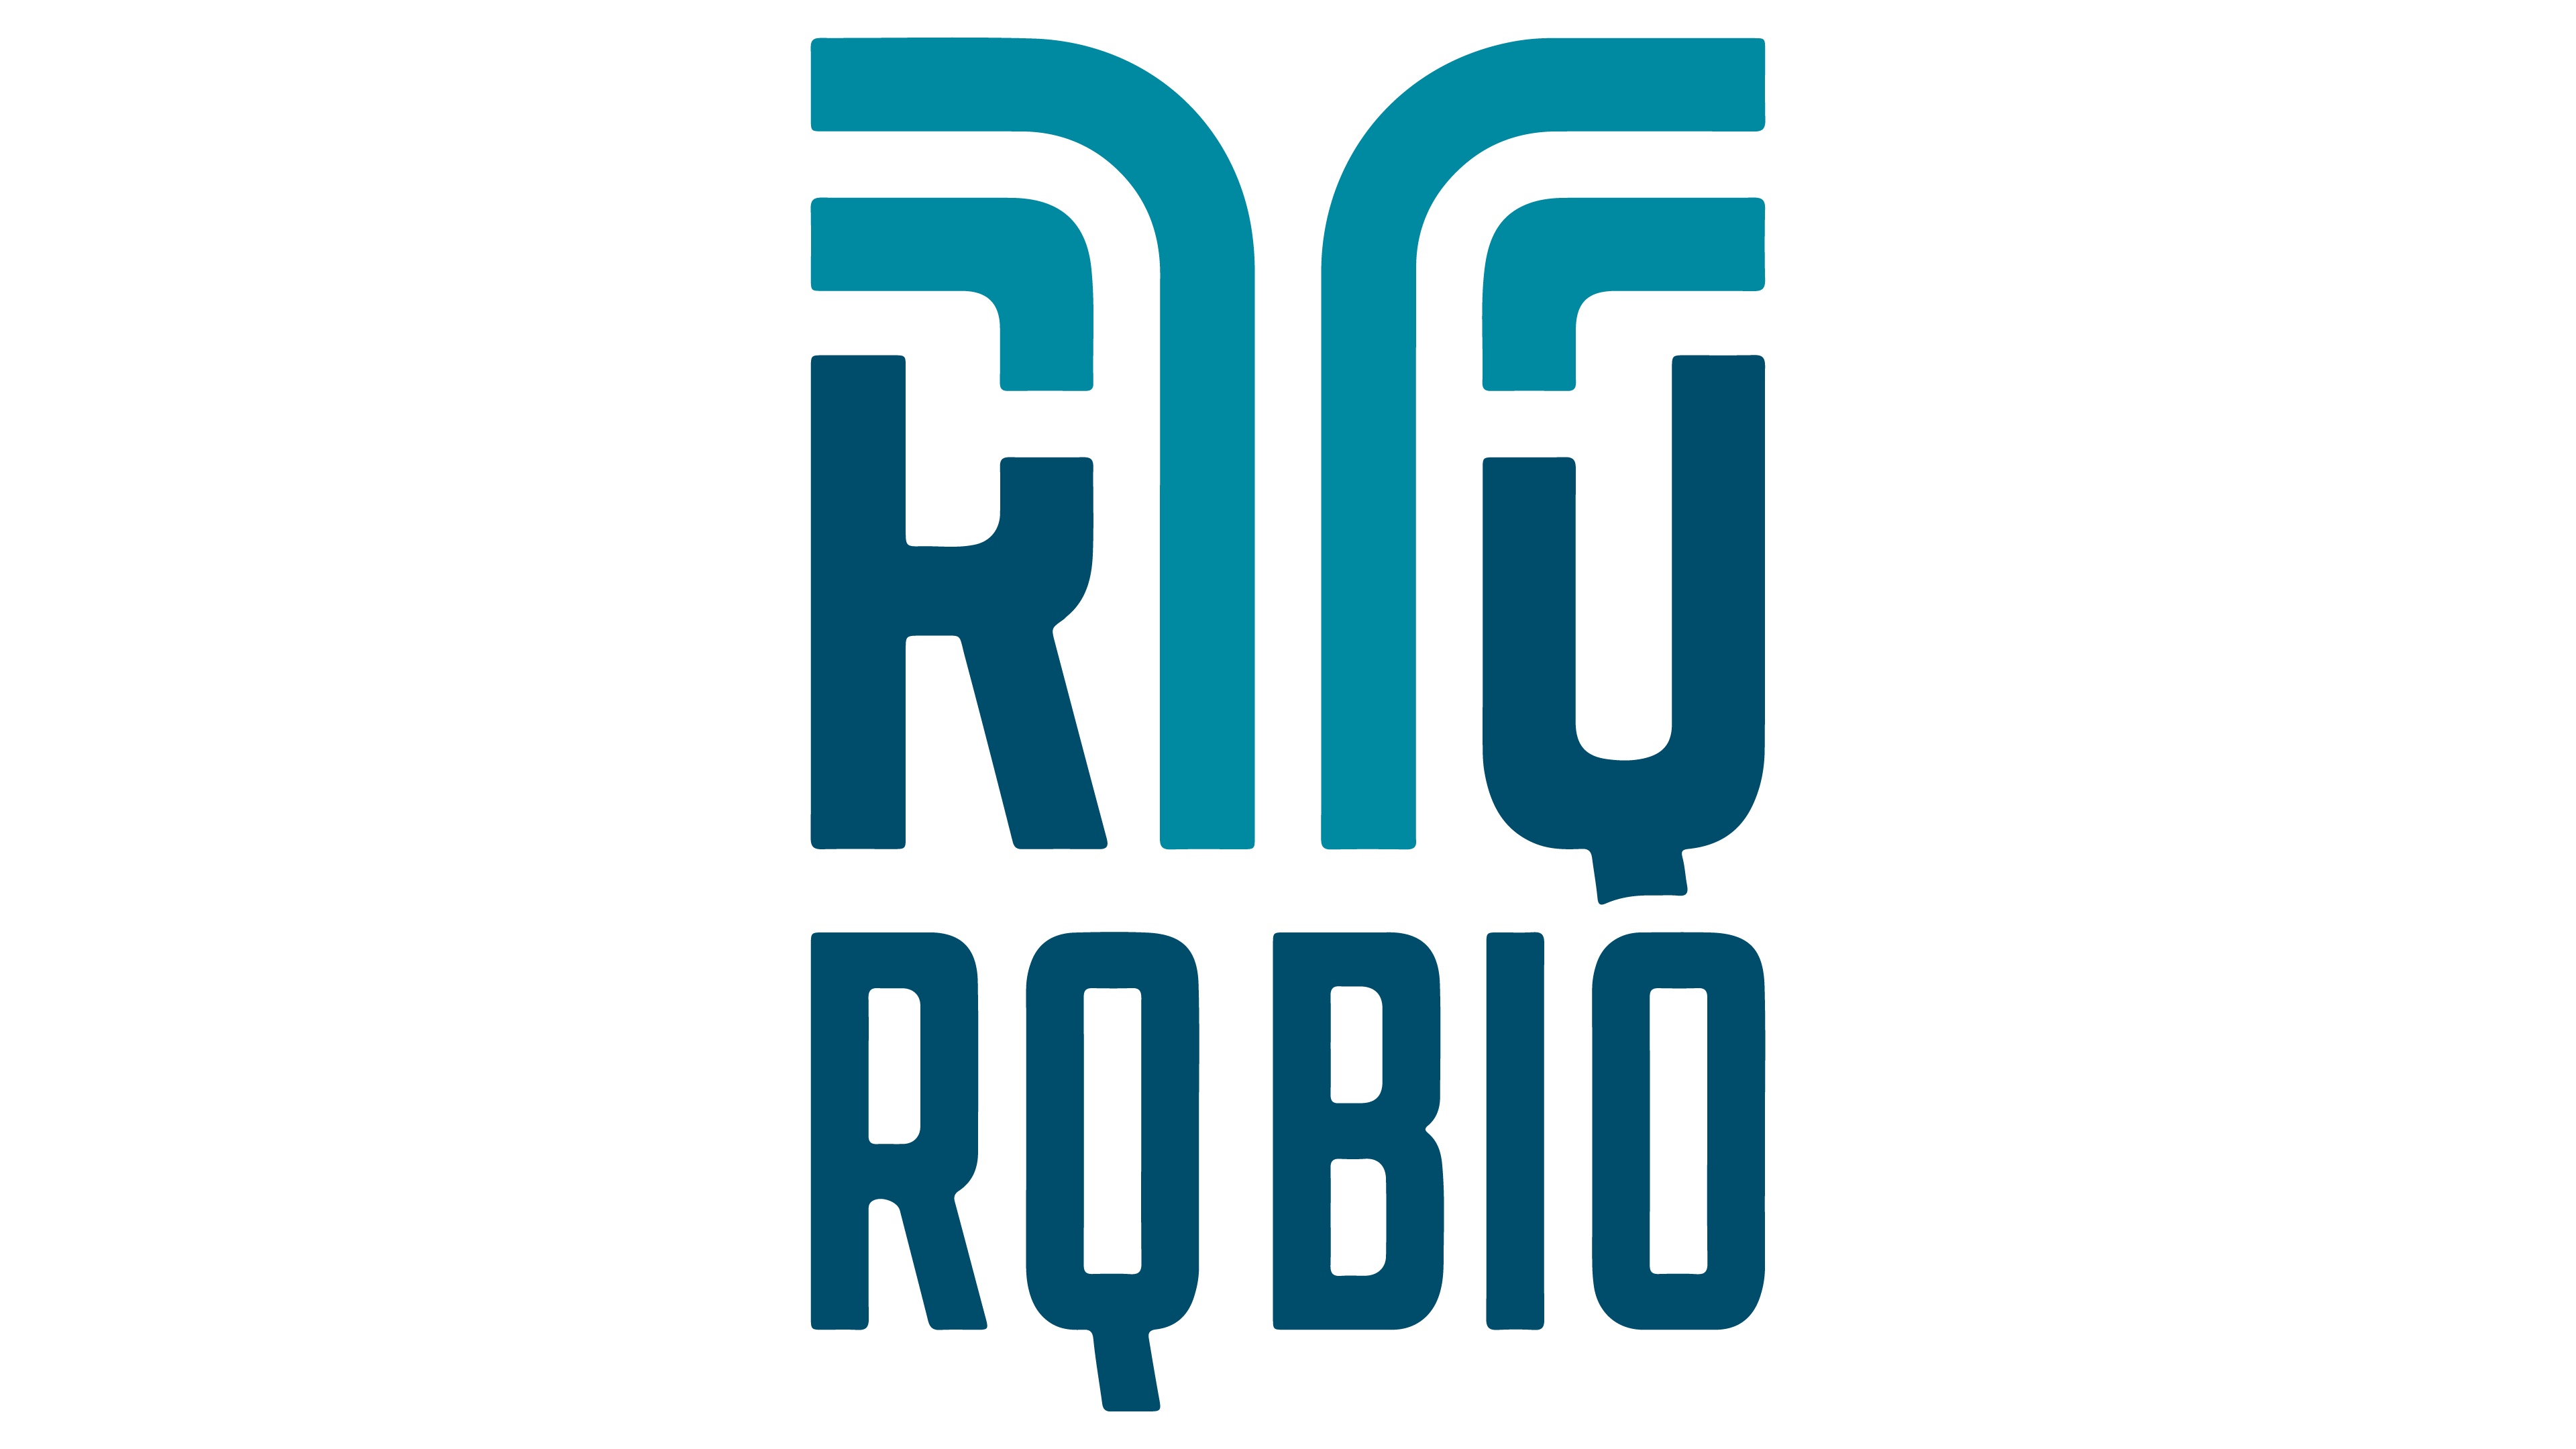 RQ Bio